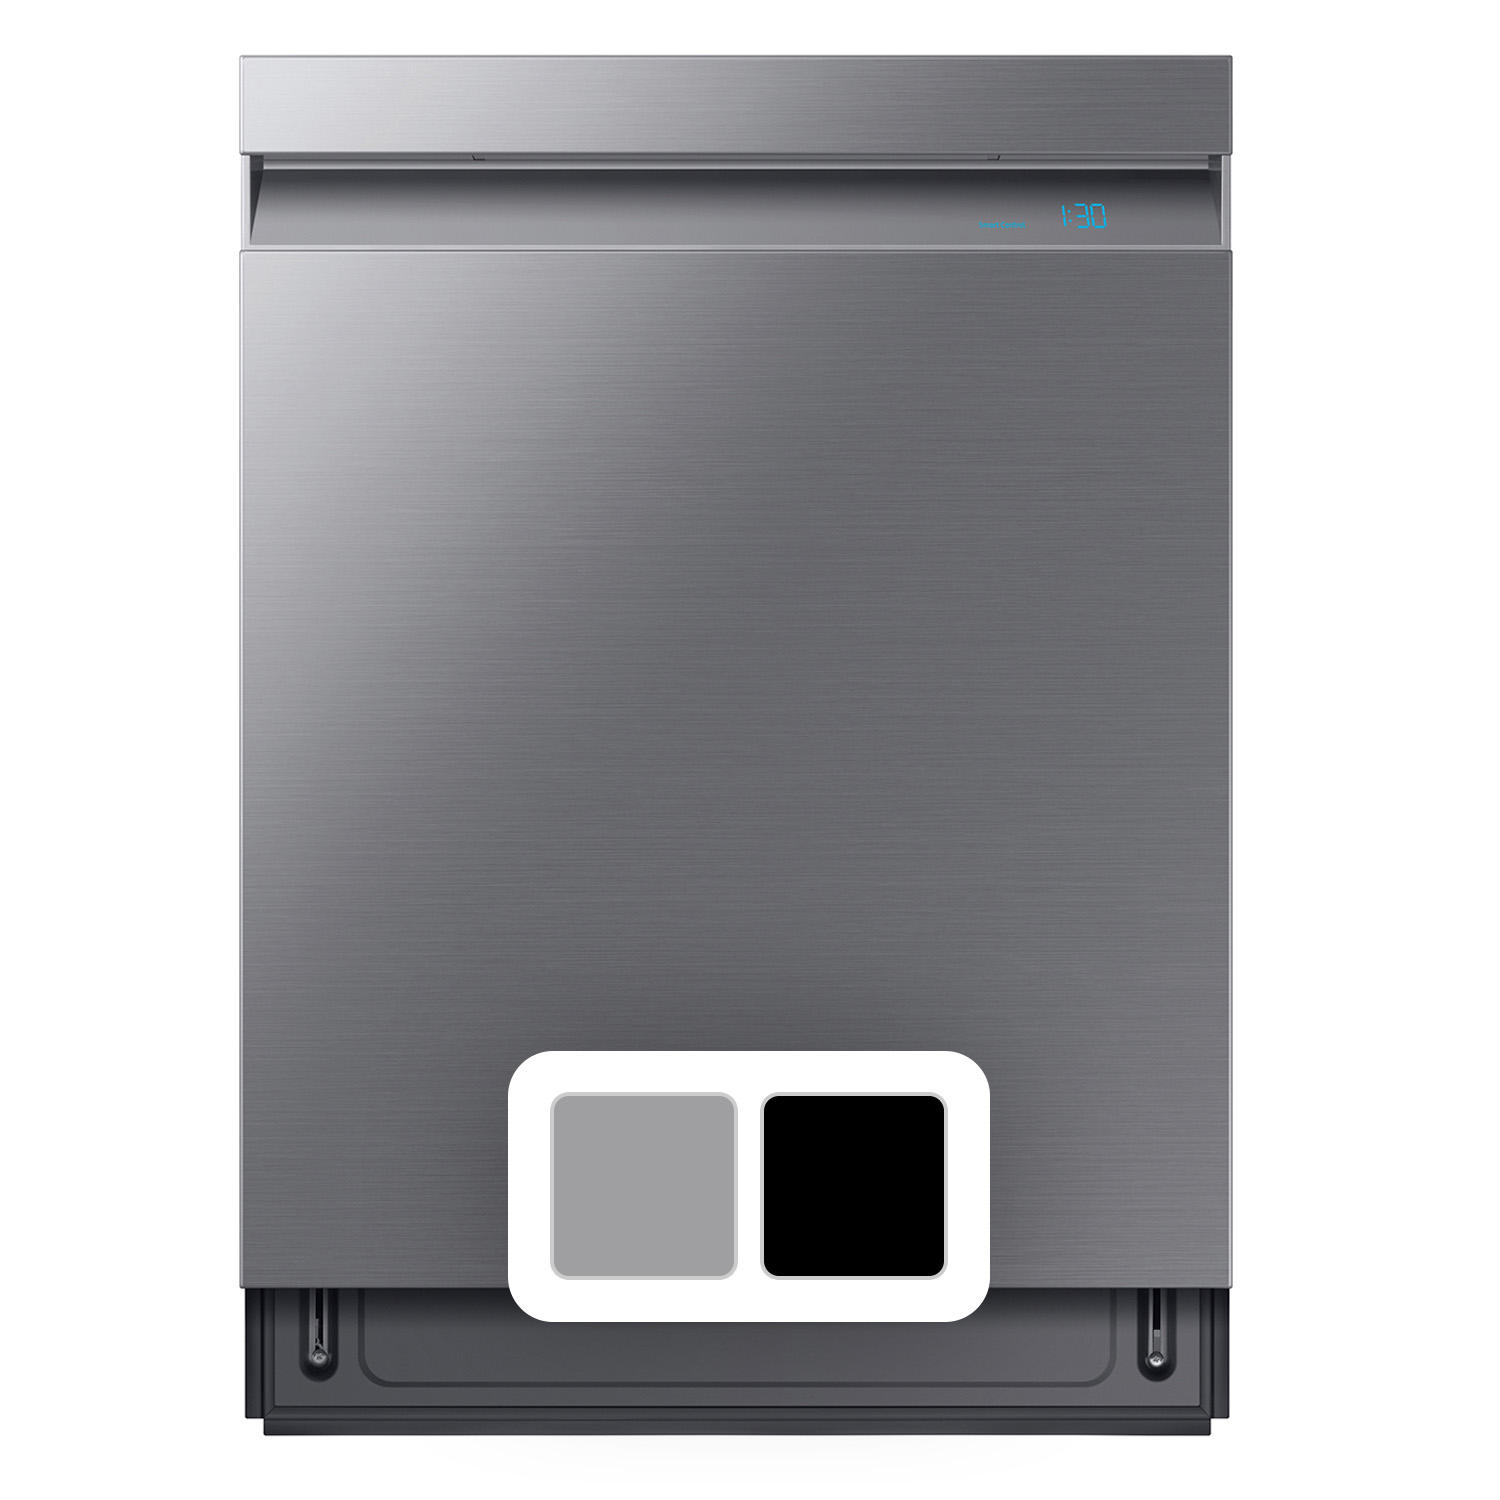 Samsung Top Control Smart Dishwasher w/ AquaBlast (Stainless Steel)